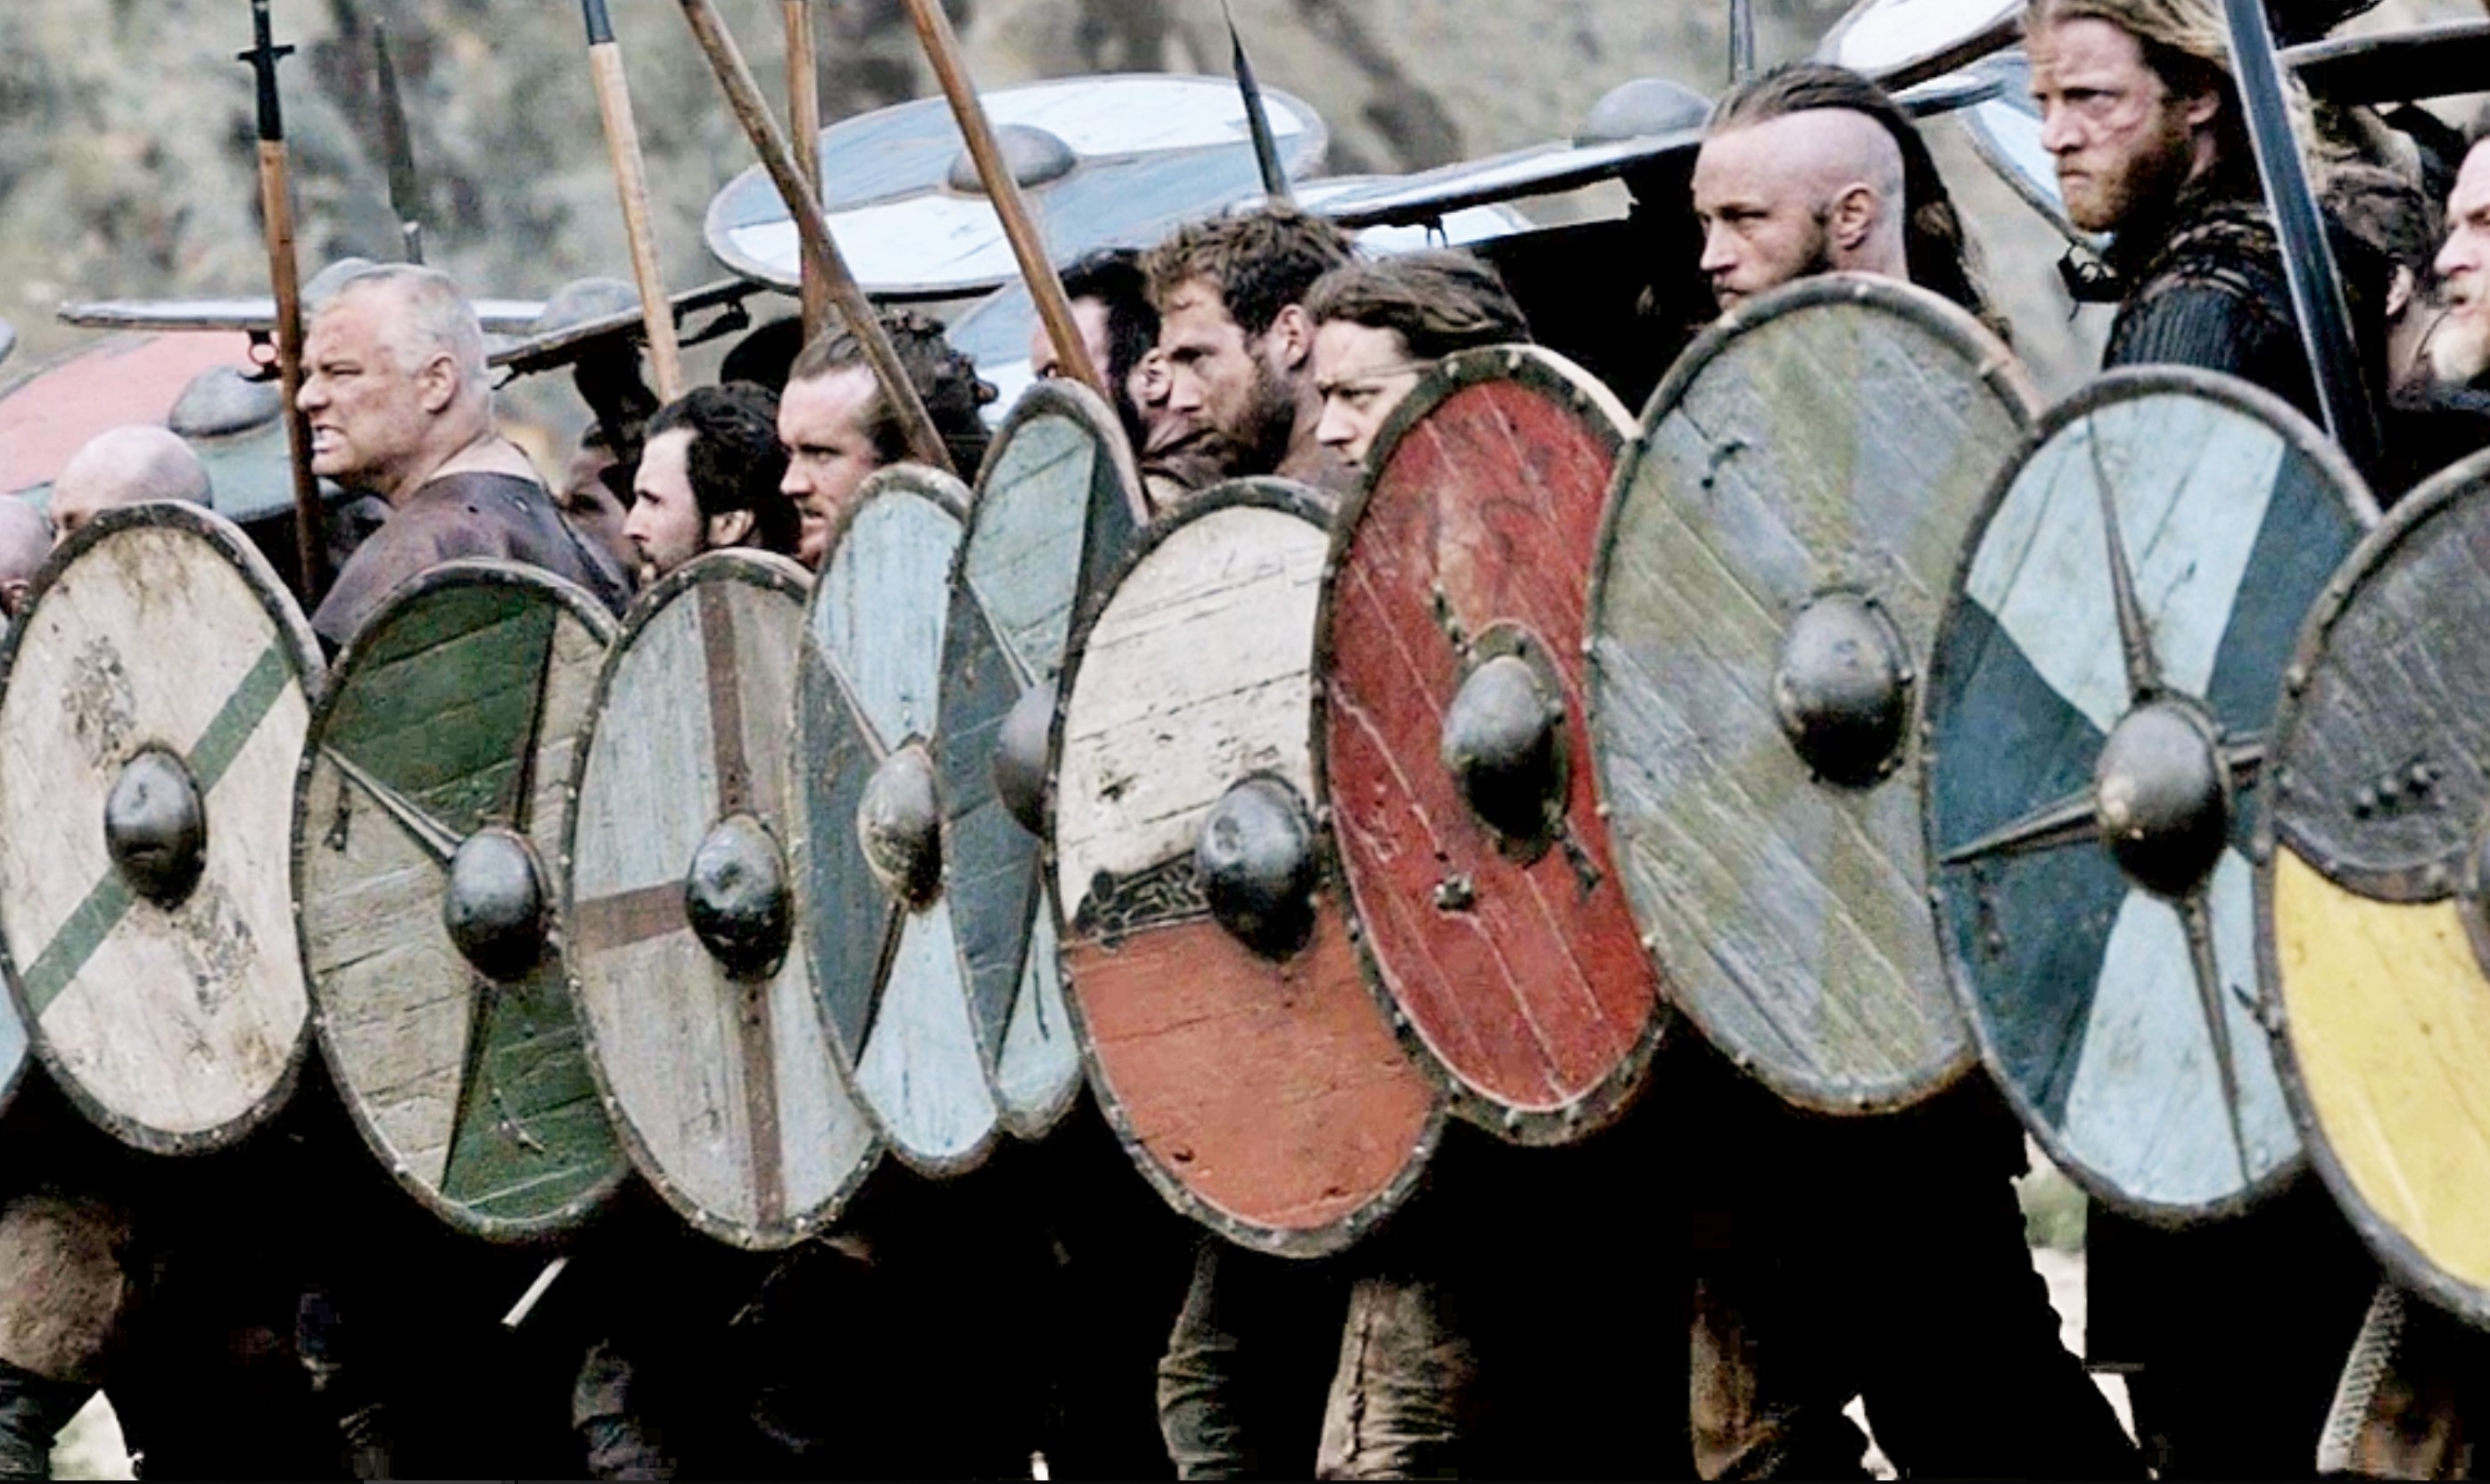 A-Medieval-Viking-shield-wall-army-warriors.jpg